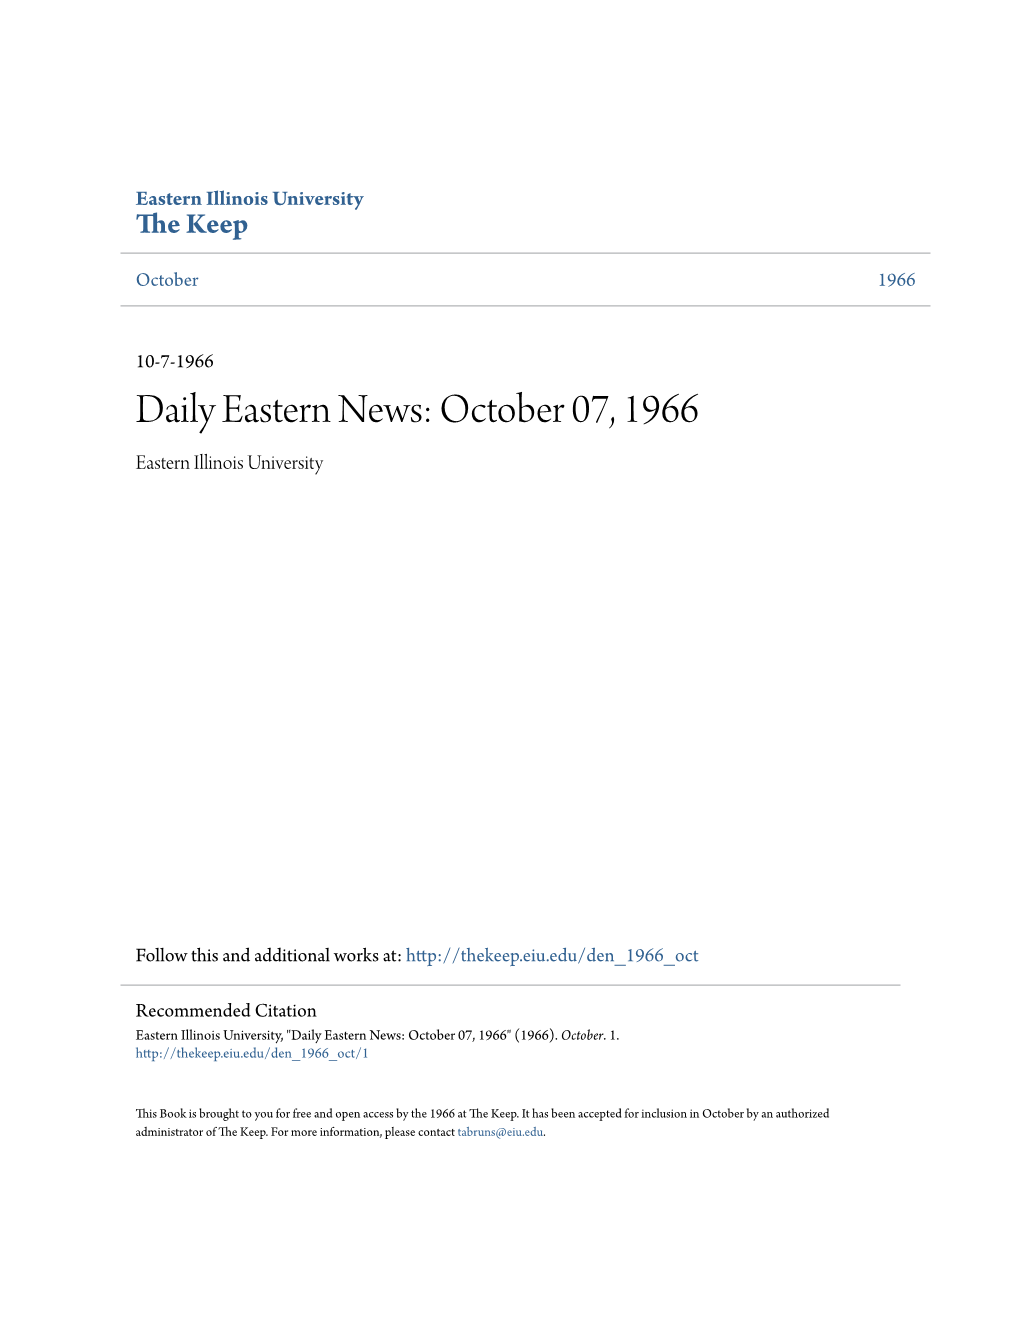 Eastern News: October 07, 1966 Eastern Illinois University